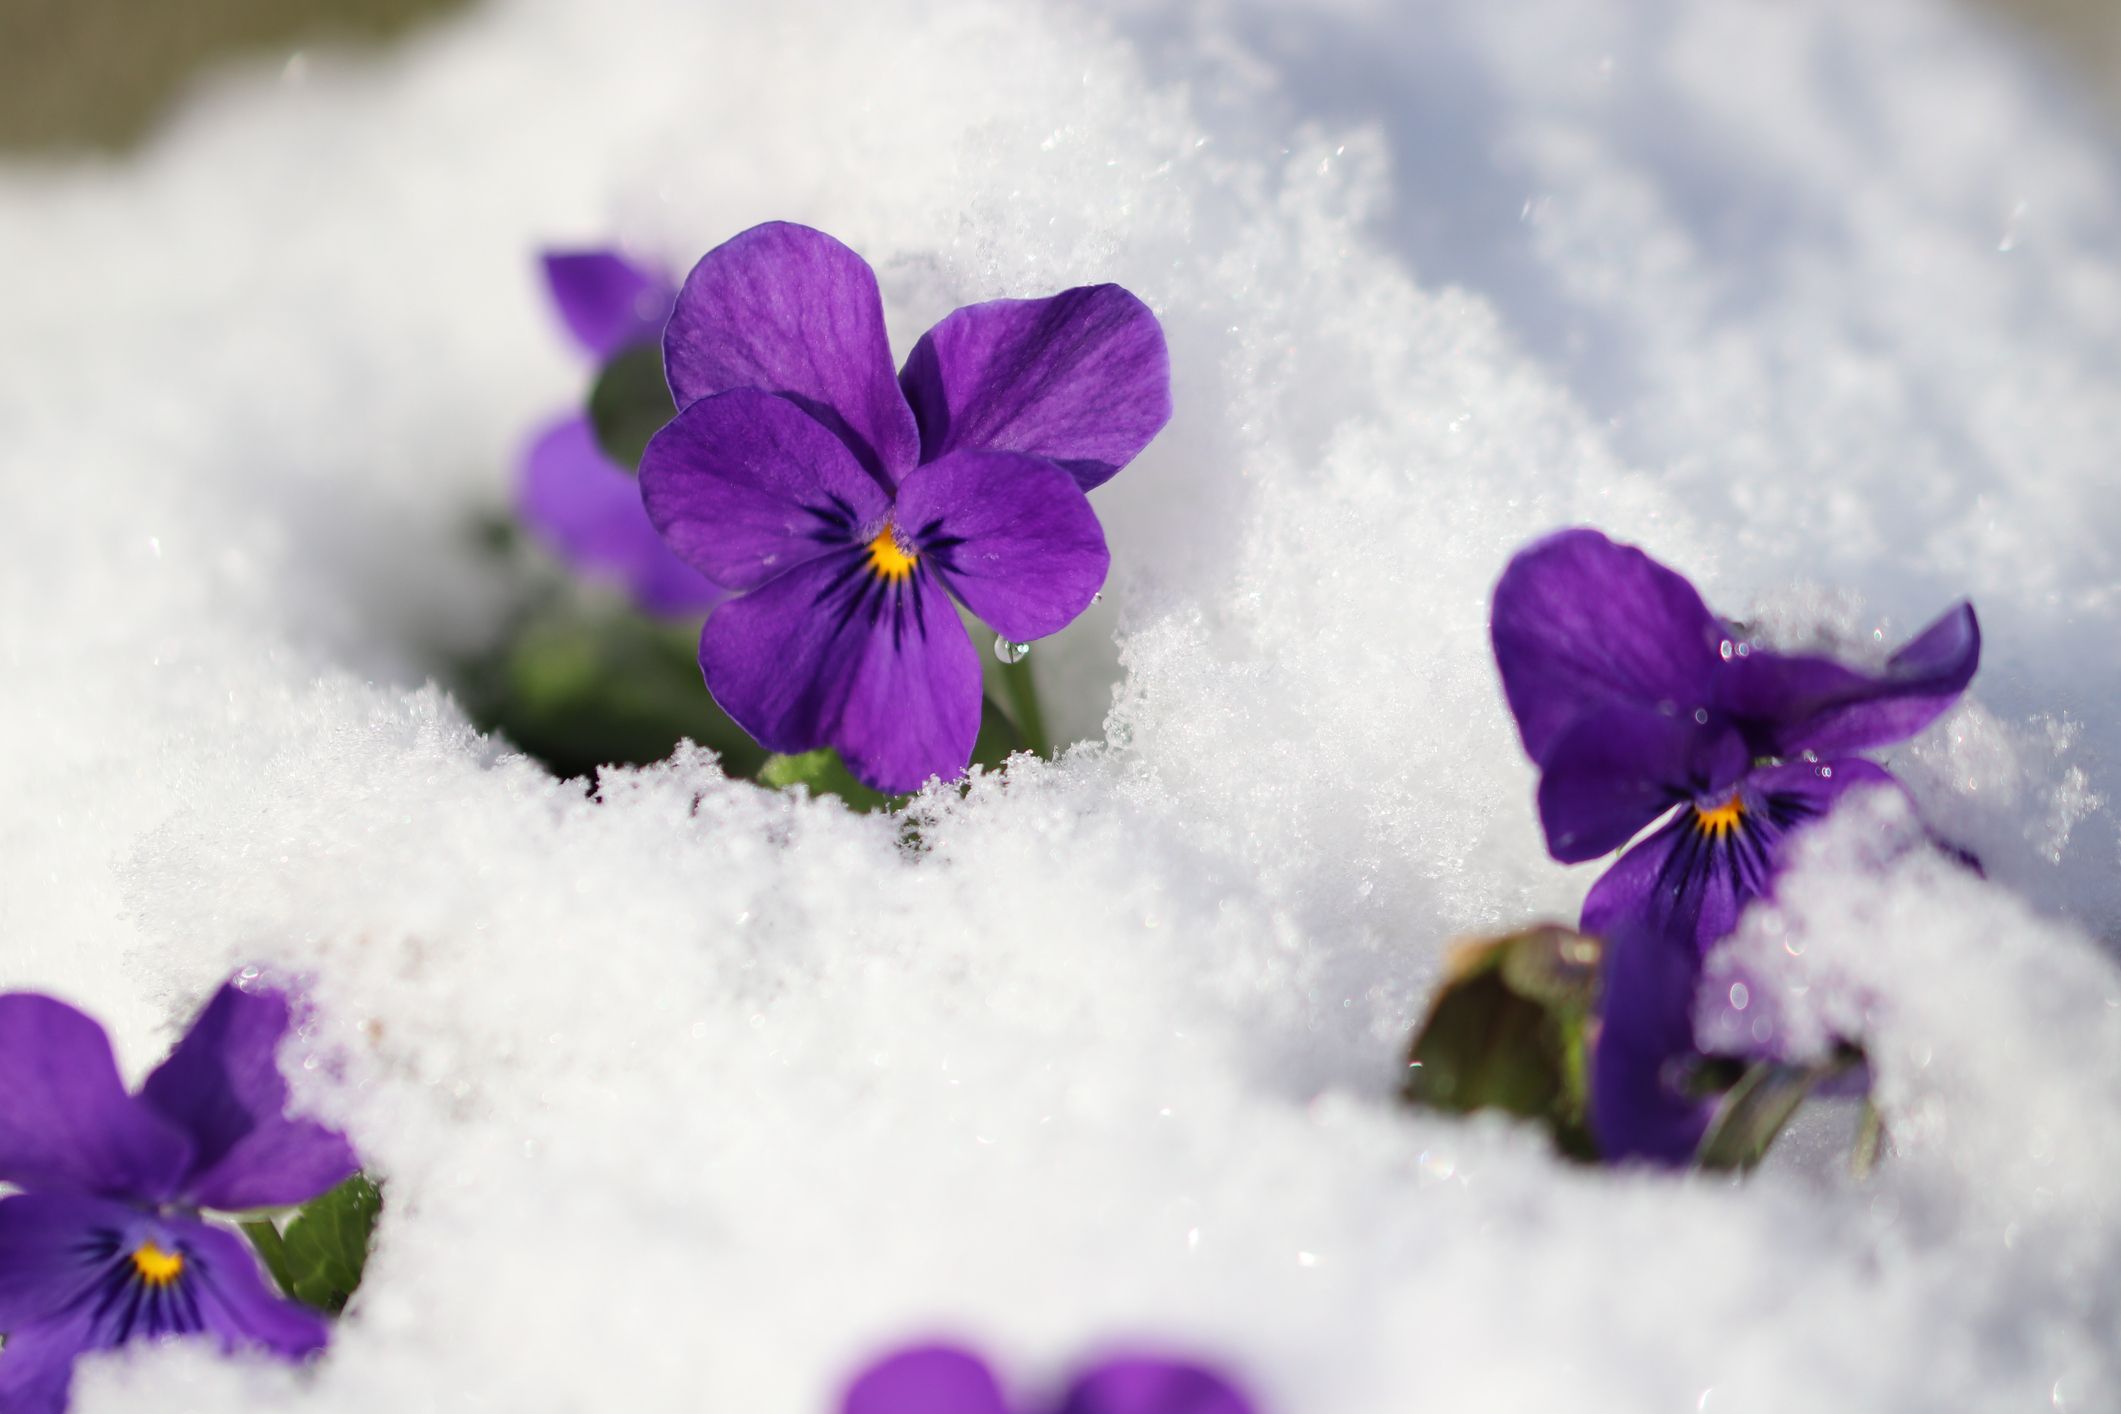 The 10 best winter flowers that bloom in wintertime